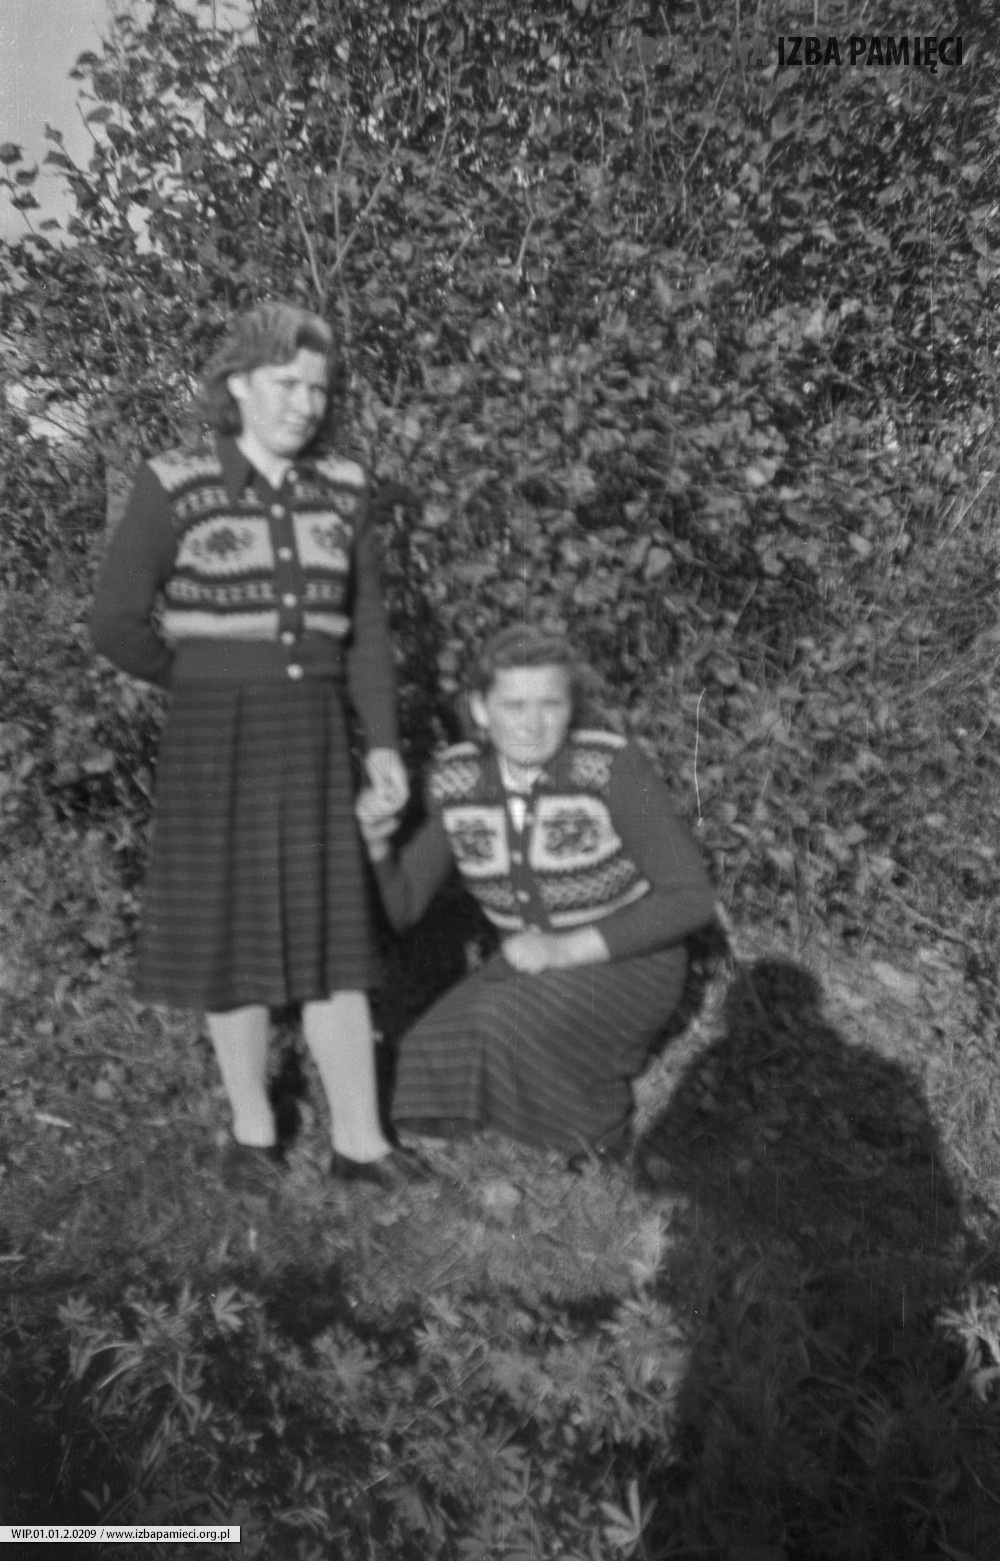 1958. Aniela Zagrobelna i Karolina Zagrobelna w podobnych ubraniach